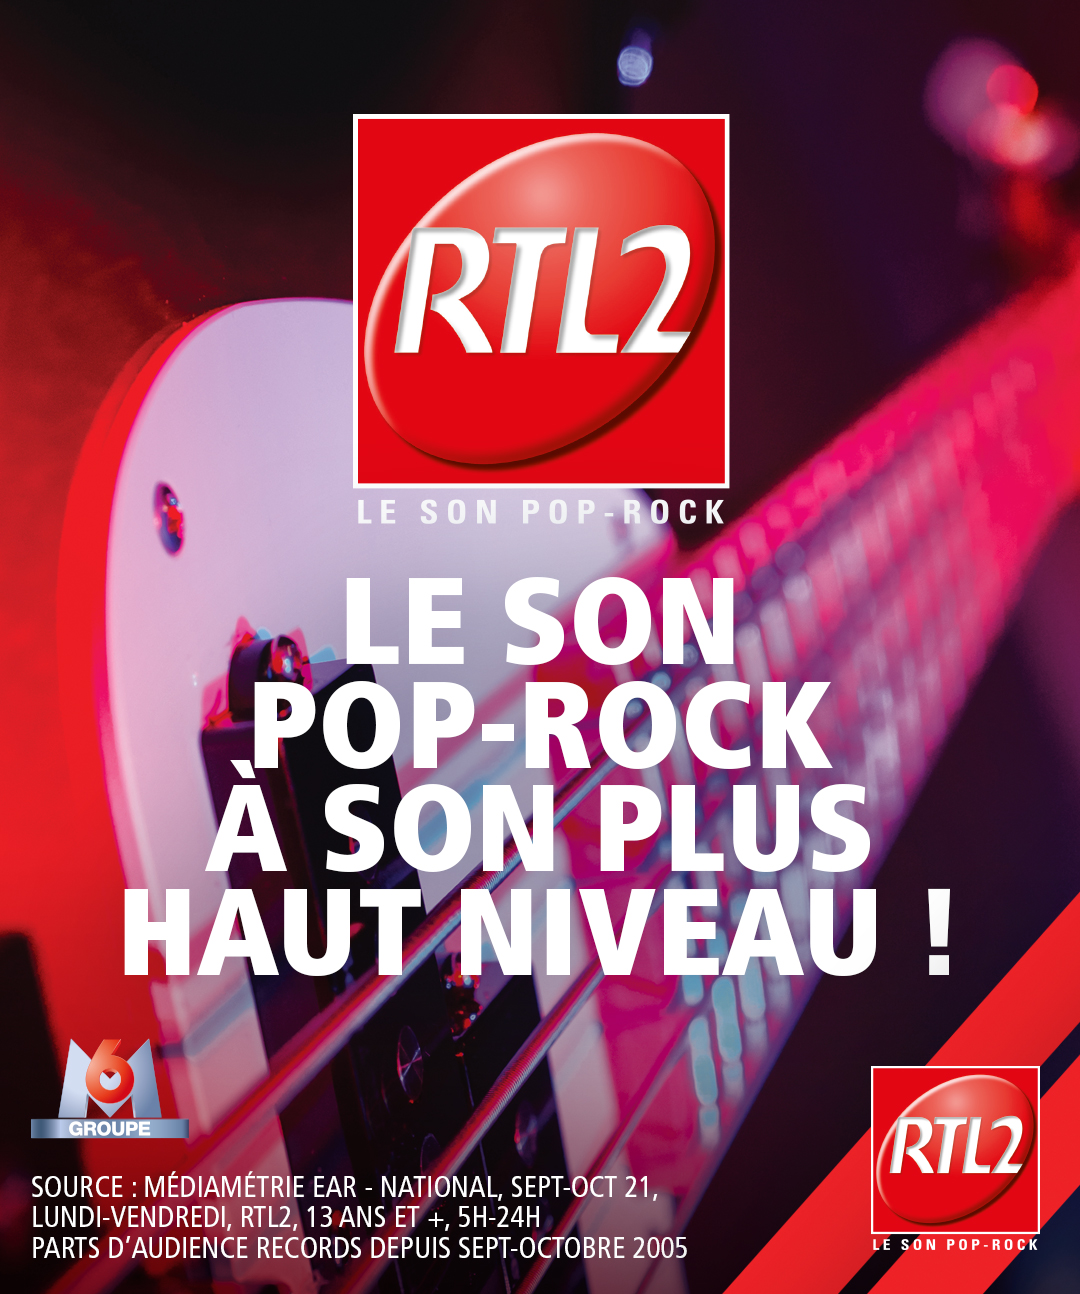 Aujourd'hui, RTL2 s'affiche dans la presse